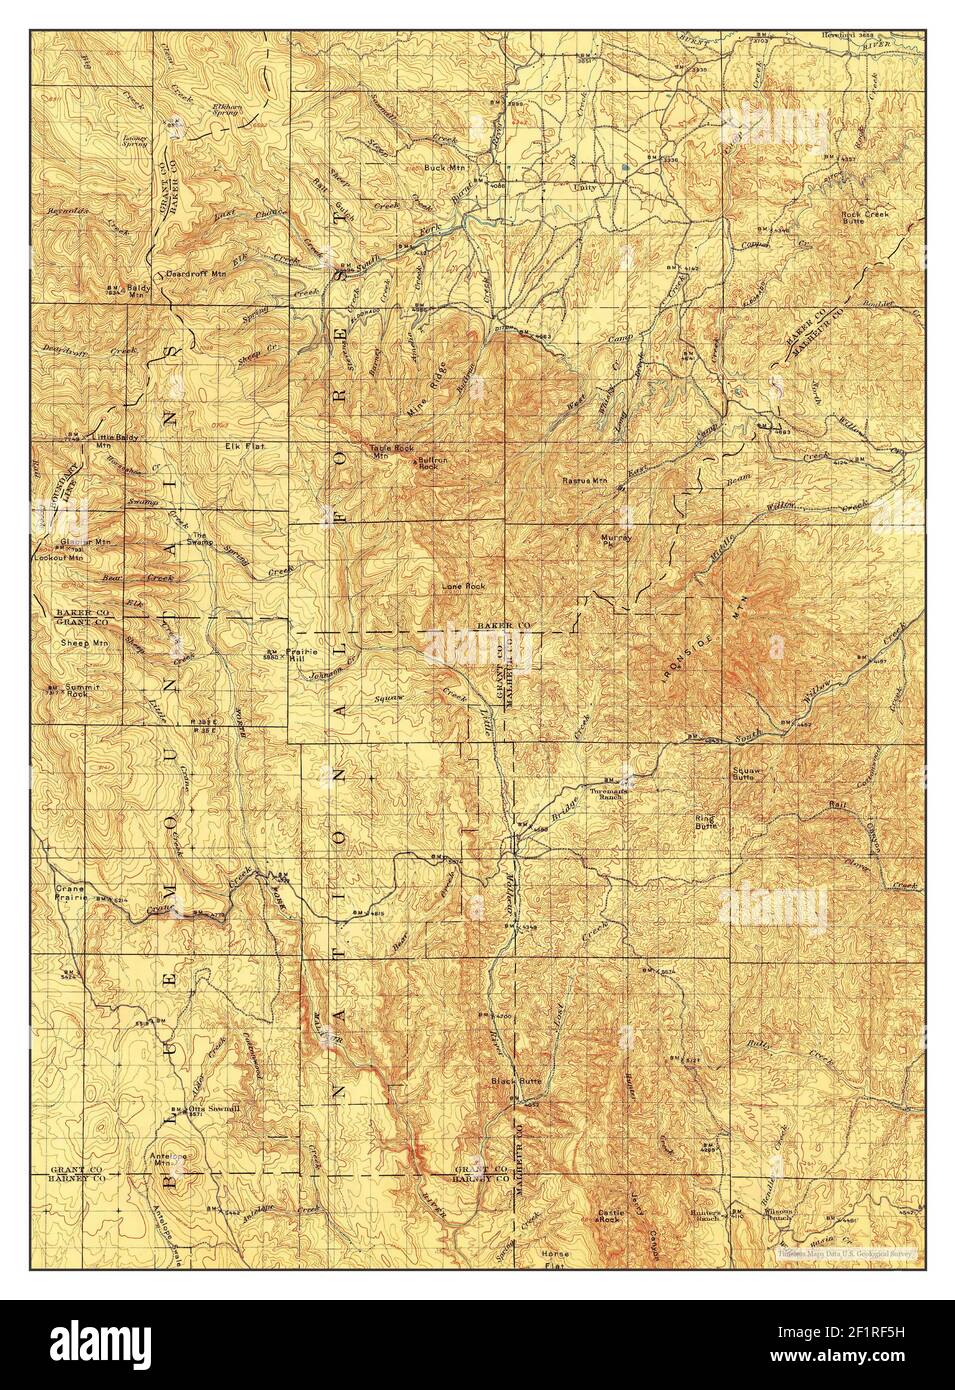 Ironside Mountain, Oregon, map 1908, 1:125000, United States of America by Timeless Maps, data U.S. Geological Survey Stock Photo